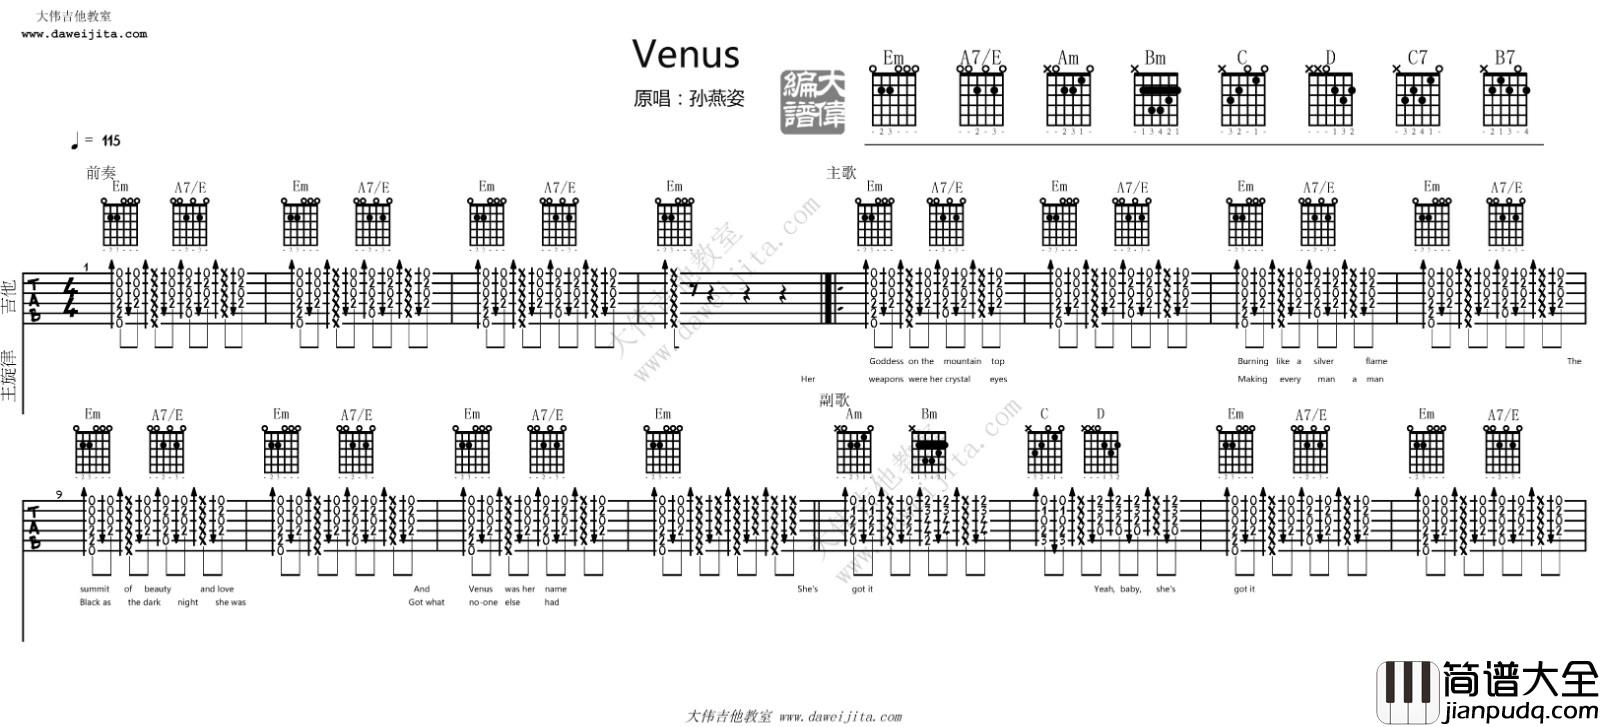 Venus(吉他谱)_孙燕姿_原版六线谱_吉他弹唱视频示范